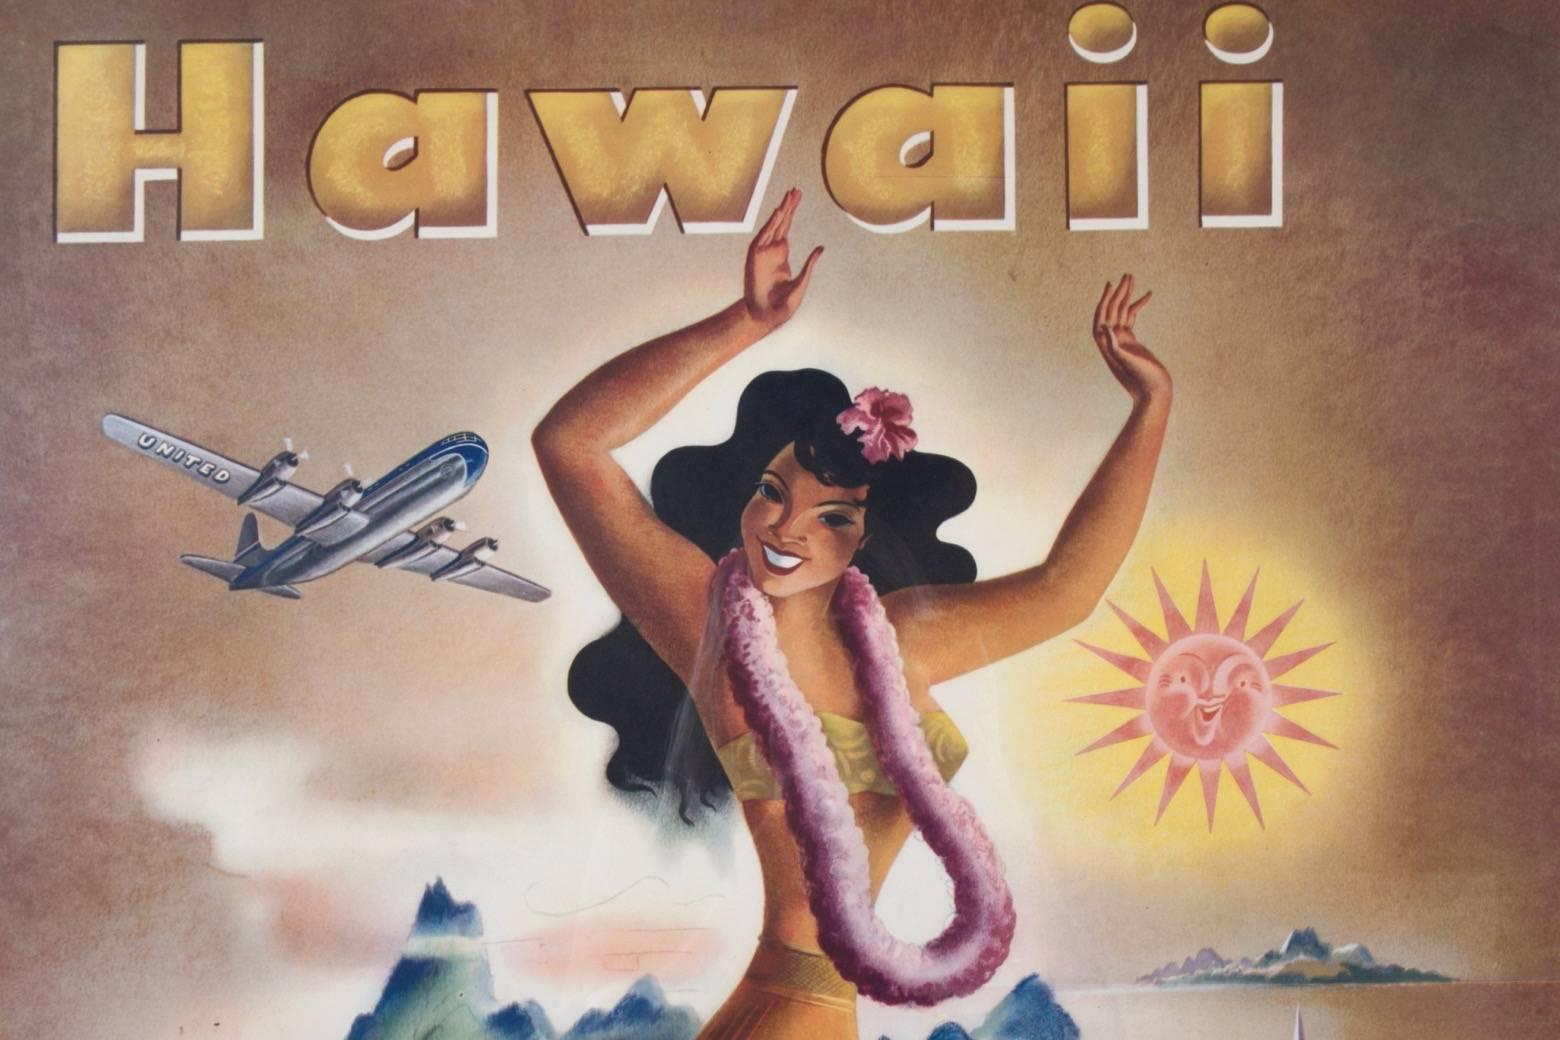 Original 1949 United Air Lines Hawaii Travel Poster Featuring Hula Girl Dancing  3